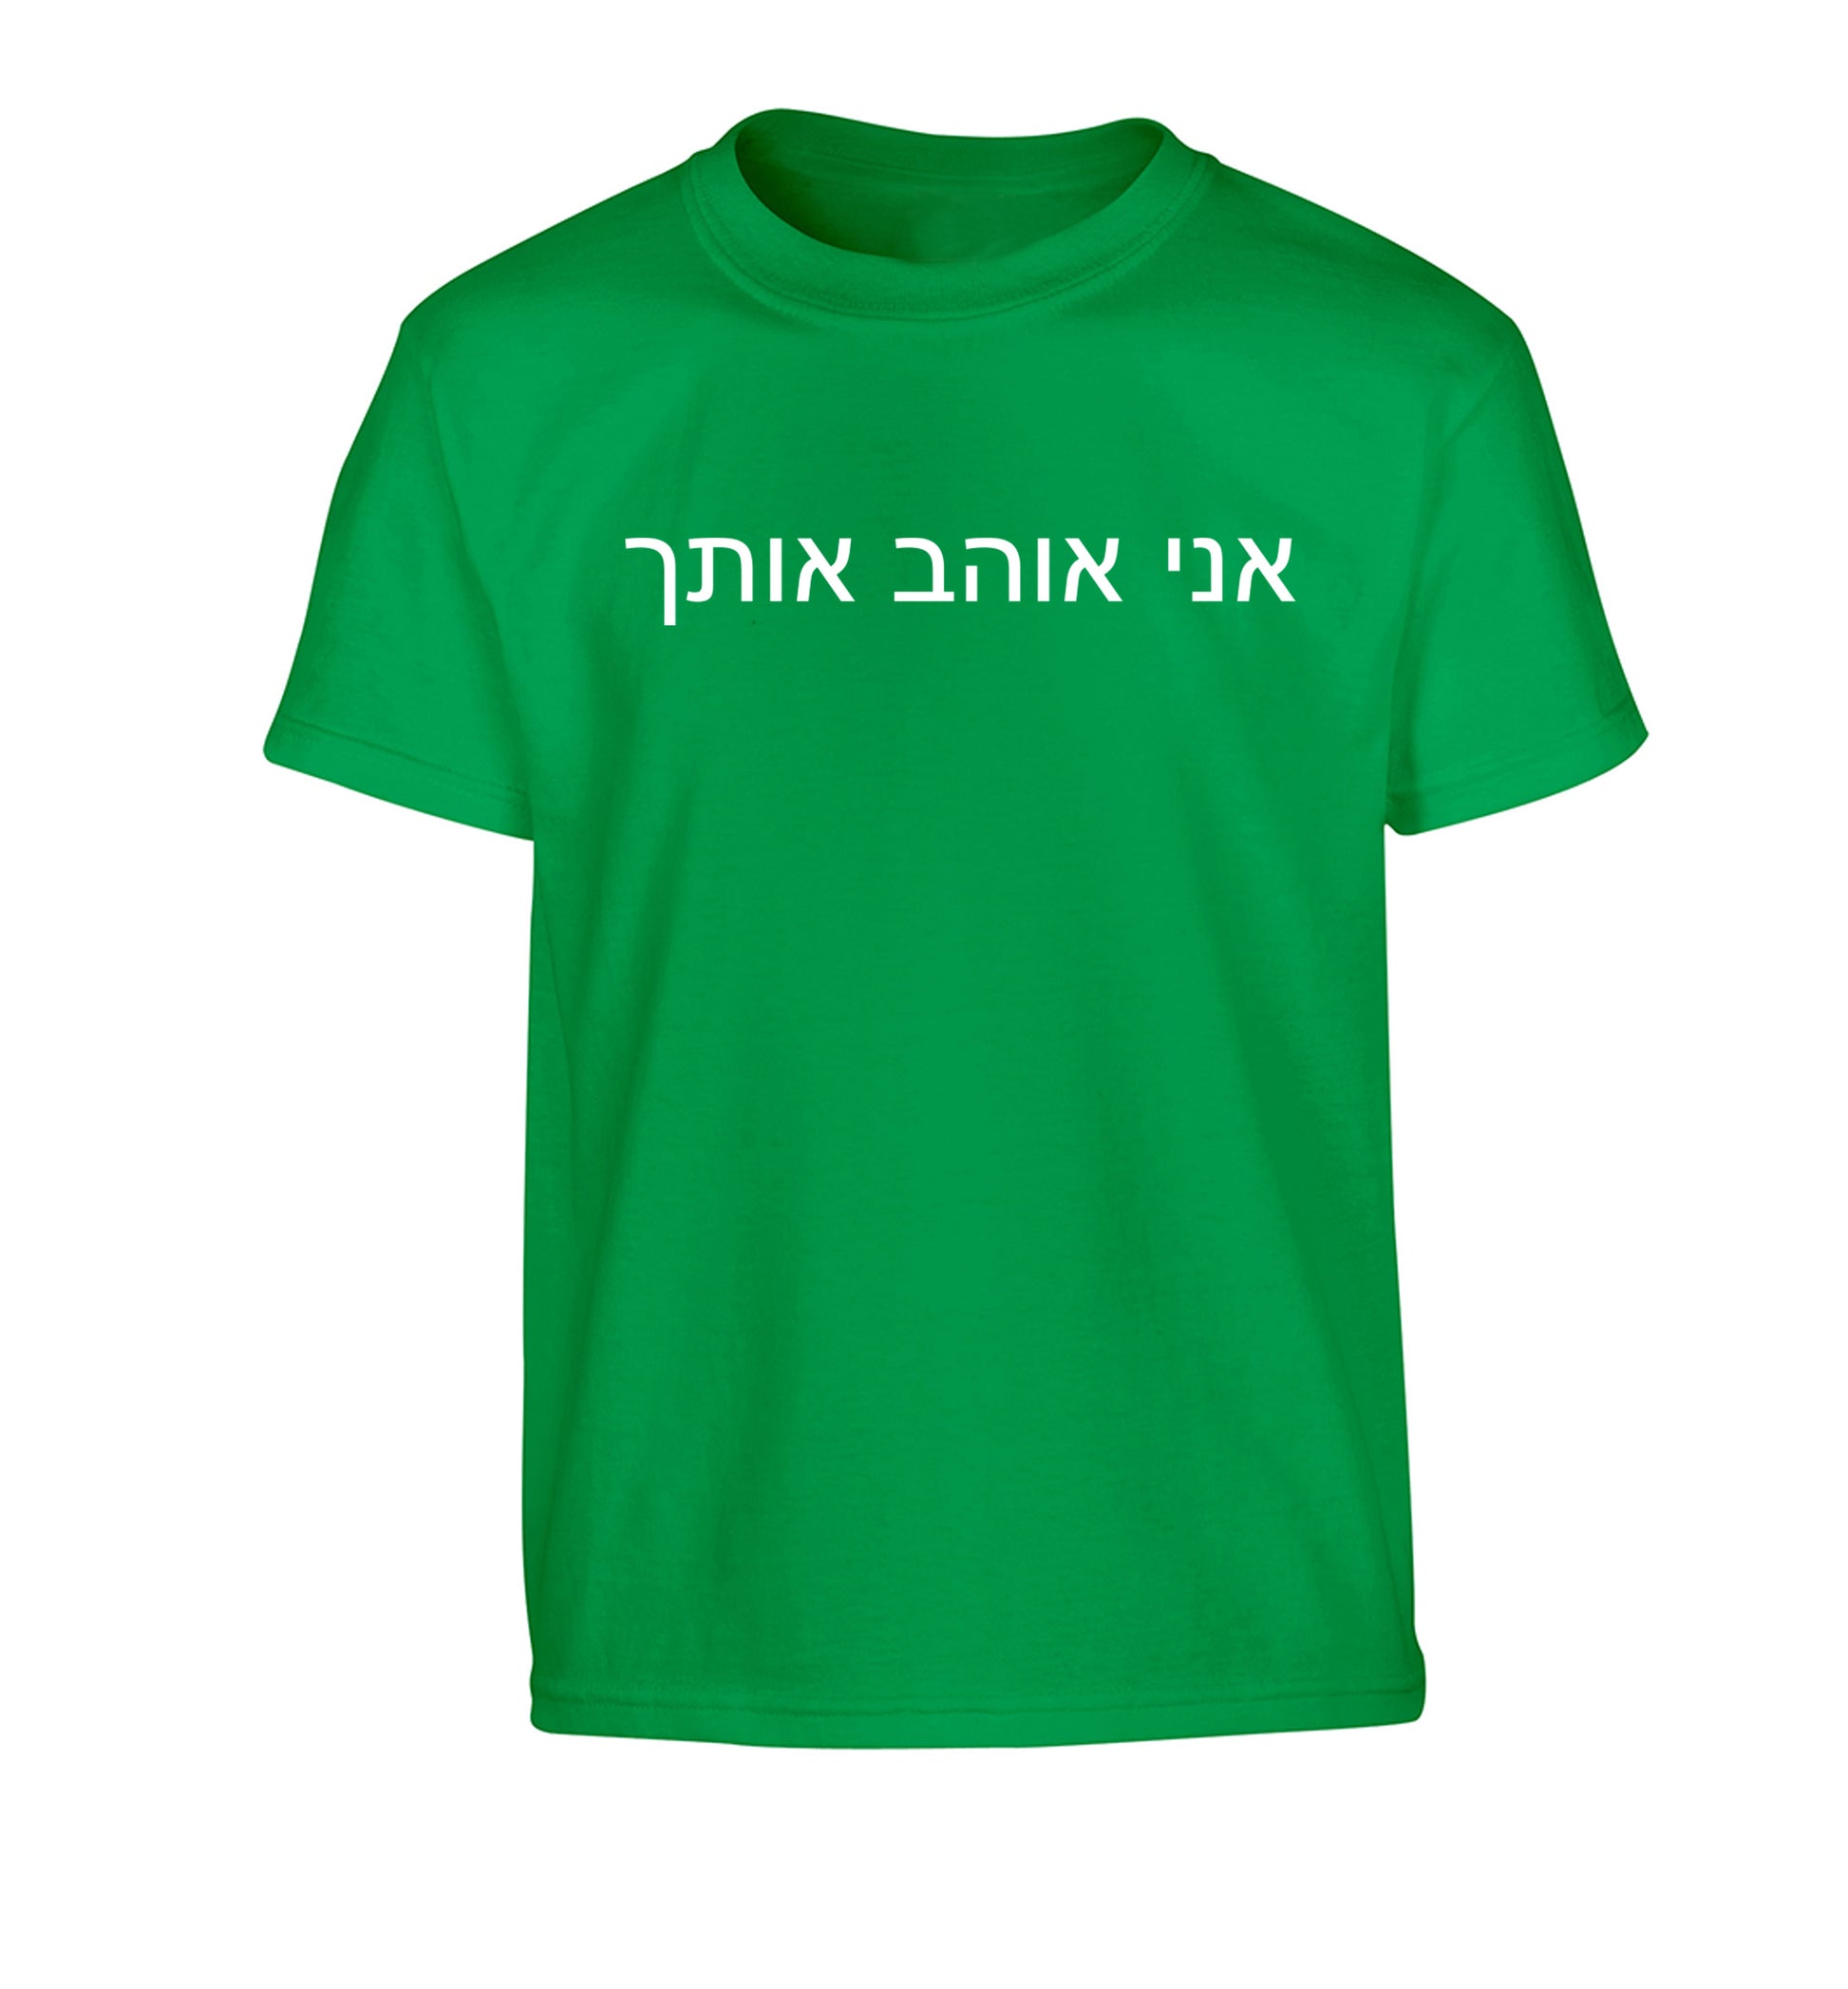 ___ ____ ____ - I love you Children's green Tshirt 12-13 Years